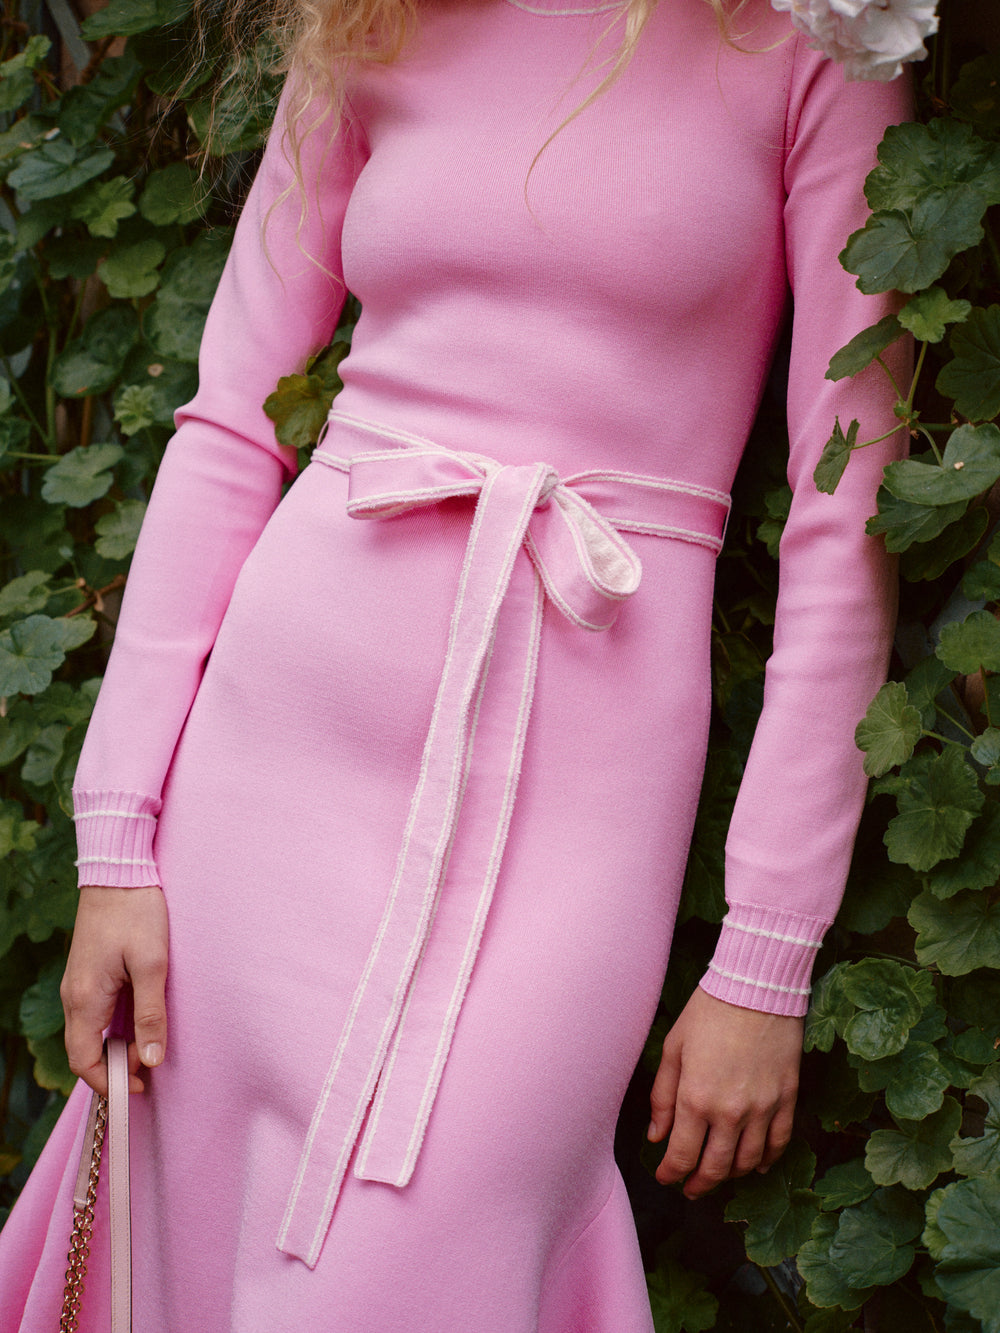 Monique Lhuillier Fall 2024 pink knit long sleeve dress with handkerchief hem and self-tie belt - look book detail.